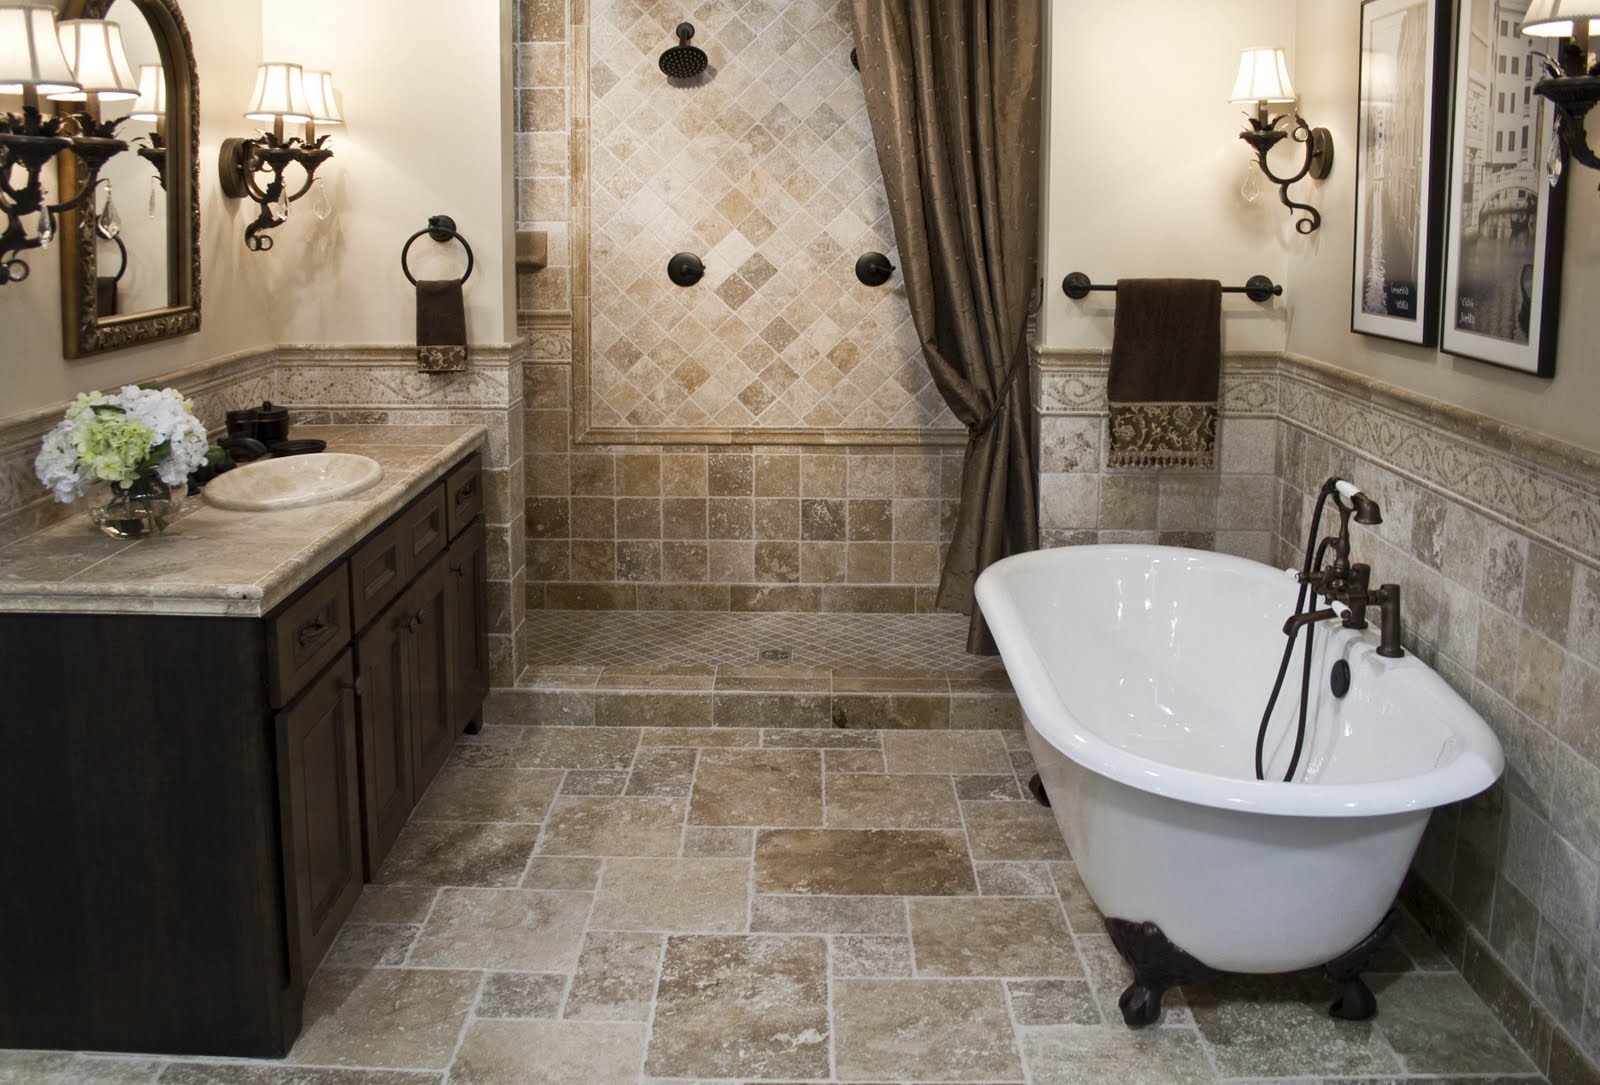 The Top 20 Small Bathroom Design Ideas for 2014  Qnud